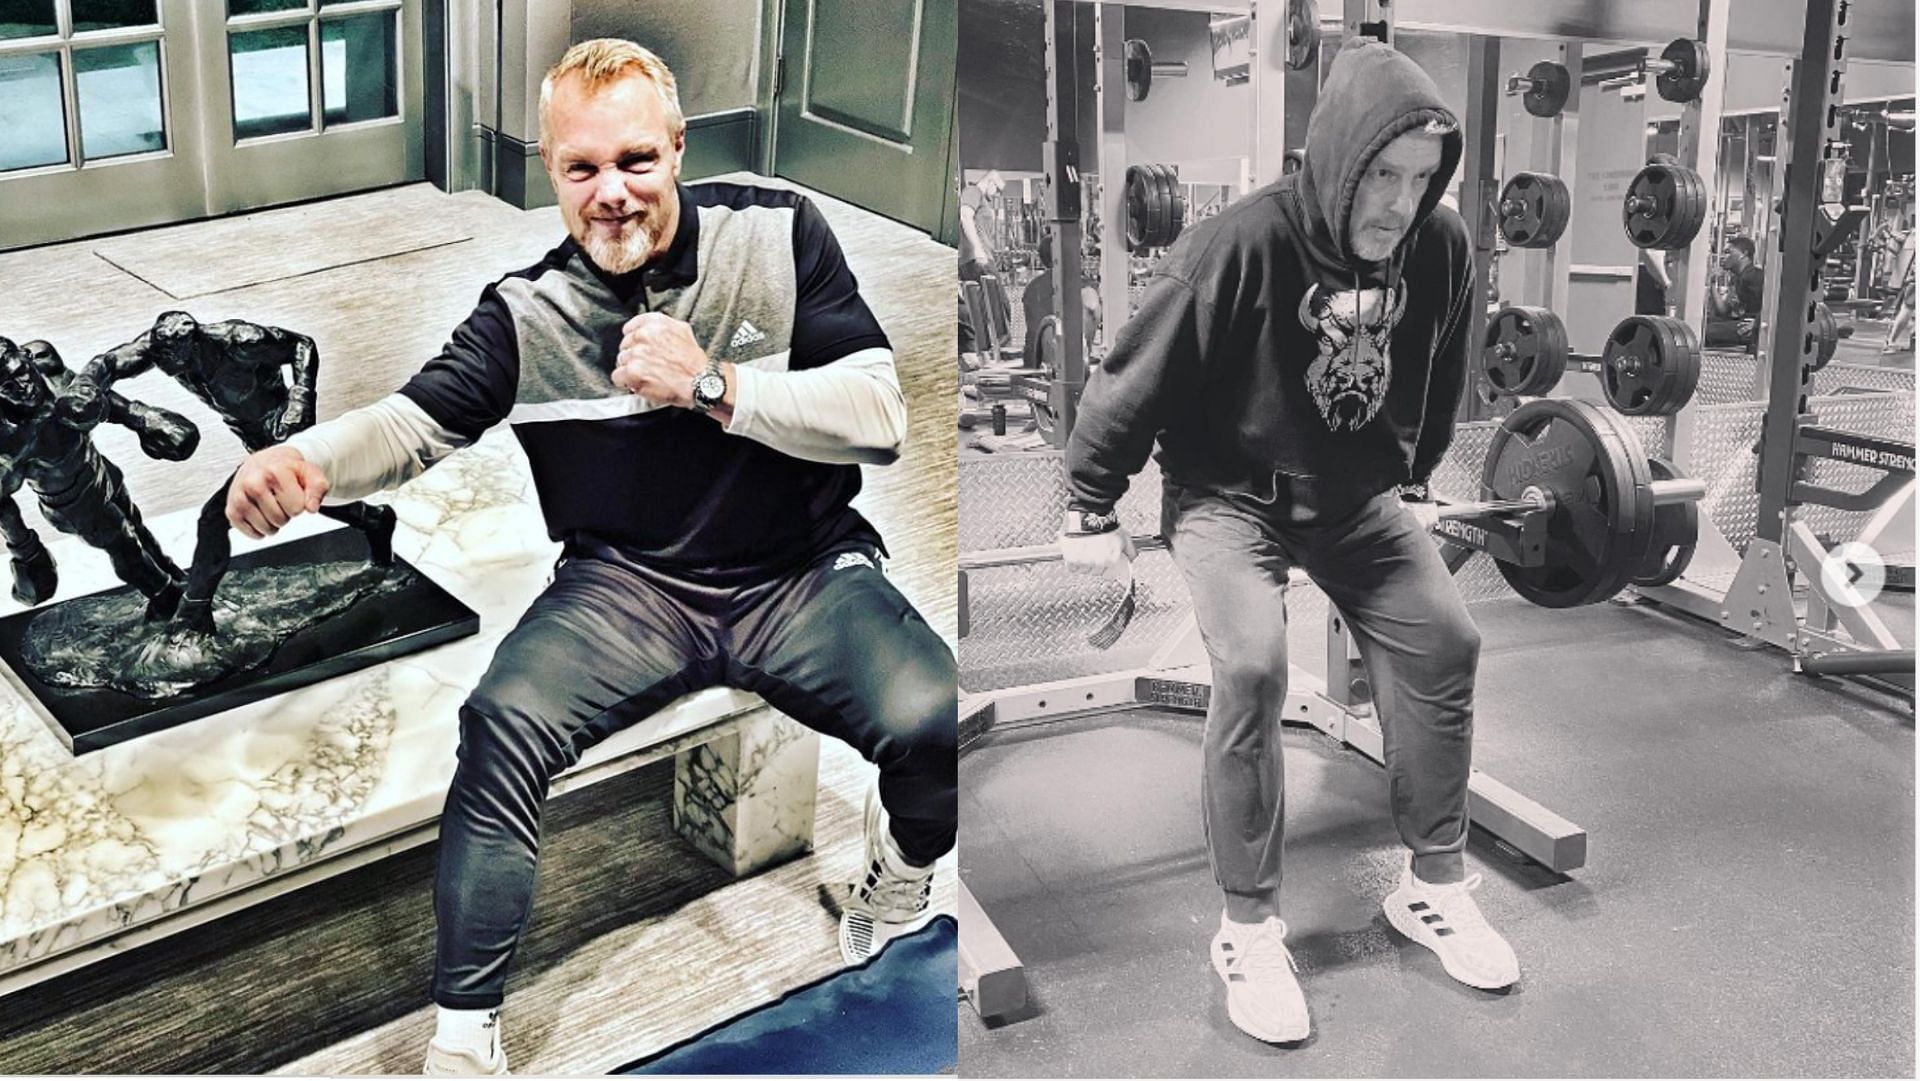 Workout routine of the fitness guru Gunnar Peterson (Image via Instagram/Gunnar Peterson)